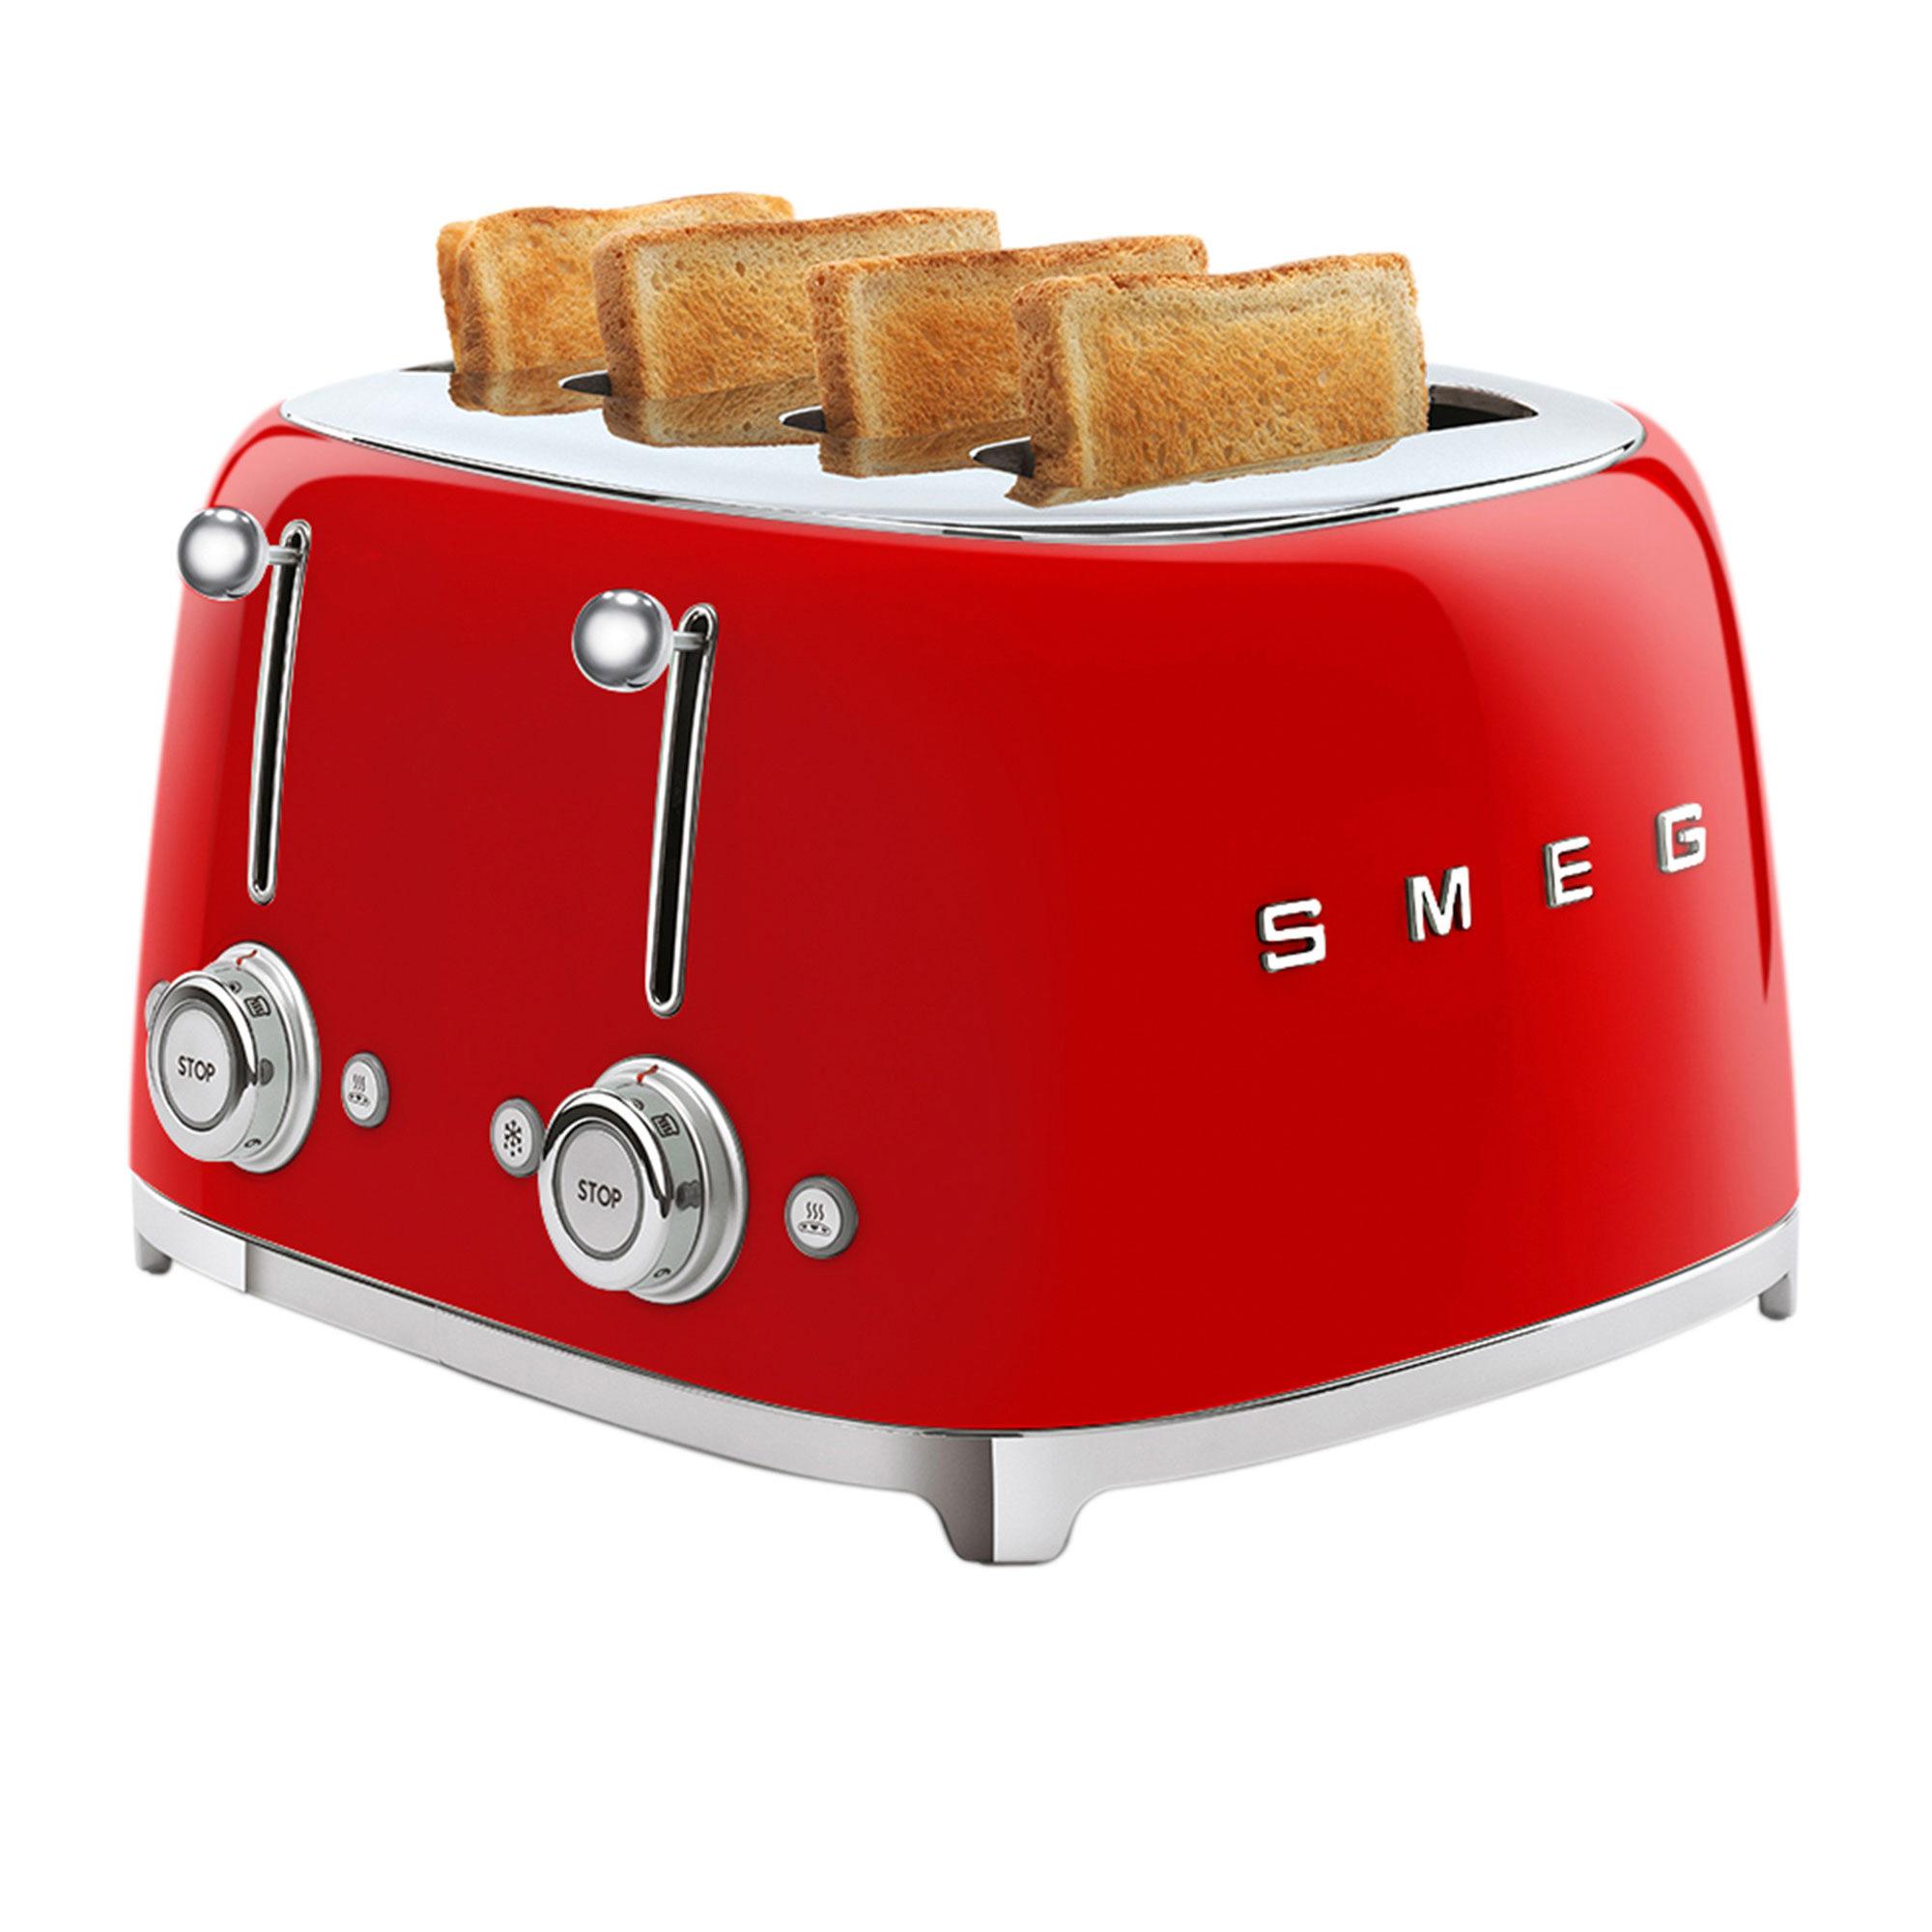 Smeg 50's Retro Style 4 Slot Toaster Red Image 3